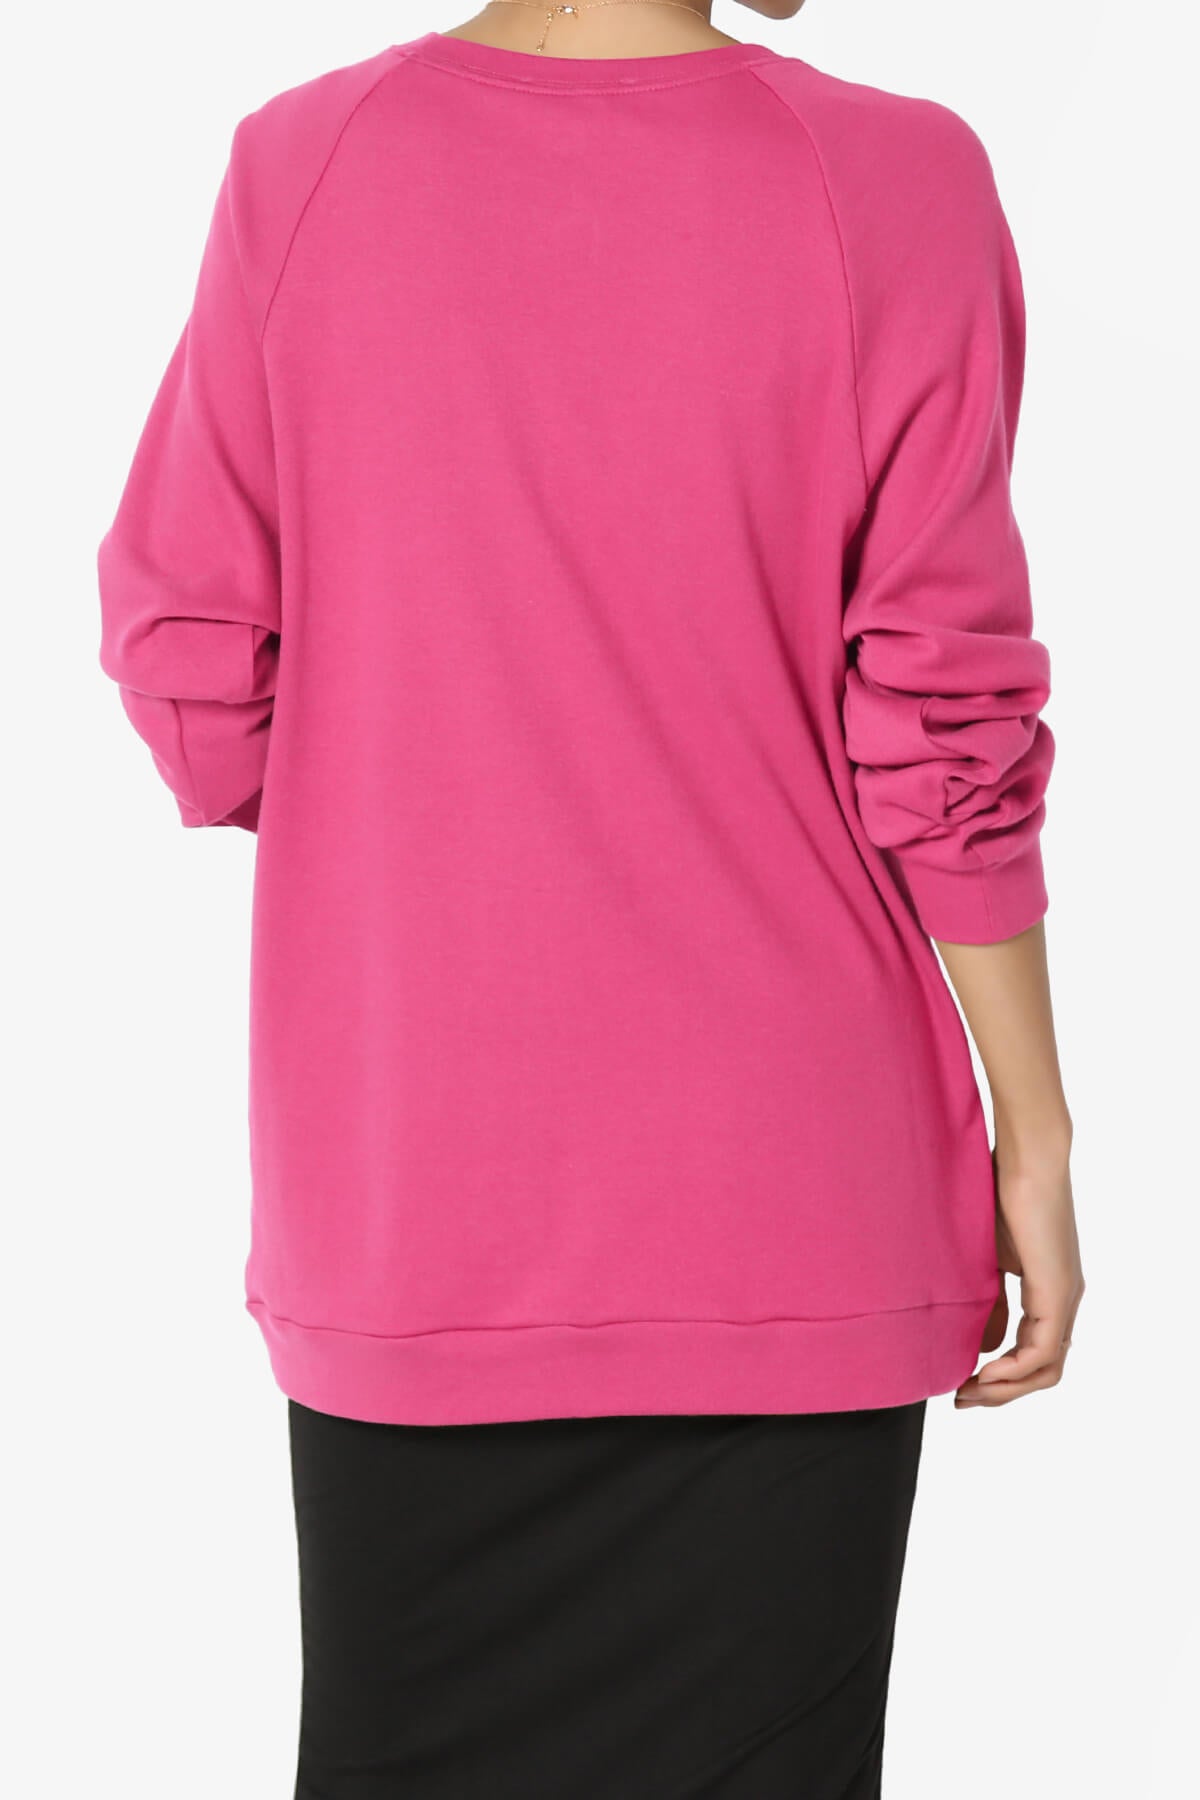 Carlene Cotton Raglan Sleeve Pullover Top HOT PINK_2